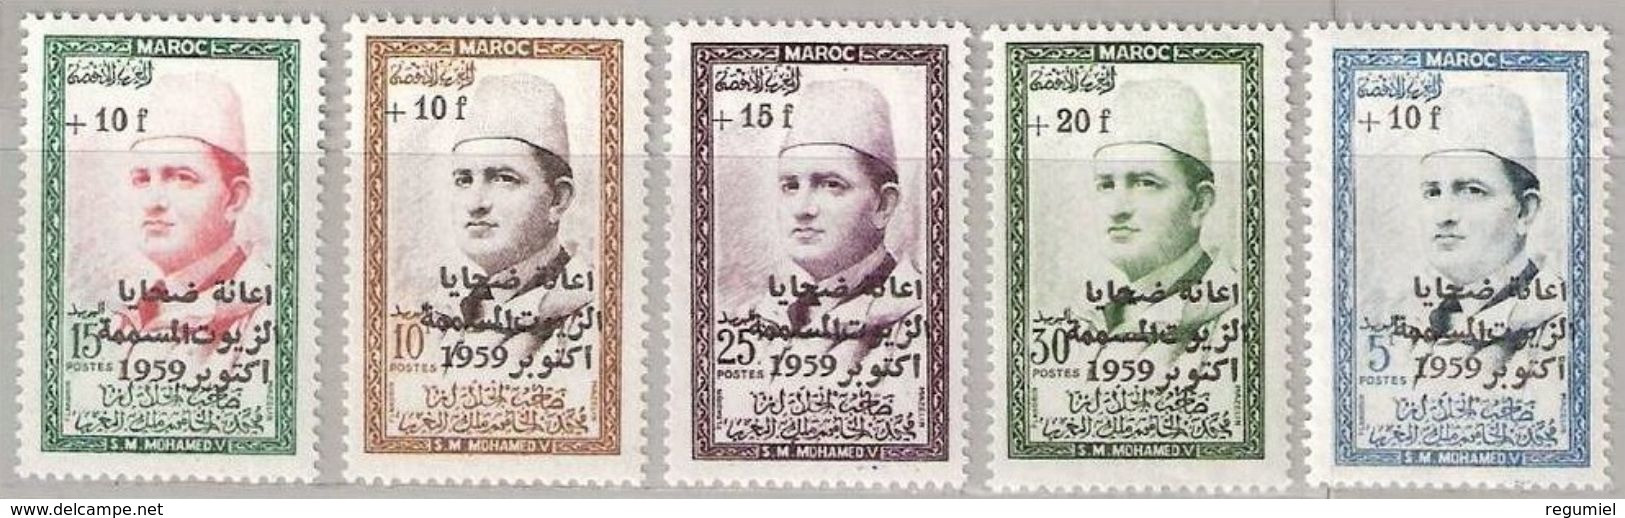 Maroc  397/401 ** MNH. 1960 - Marokko (1956-...)